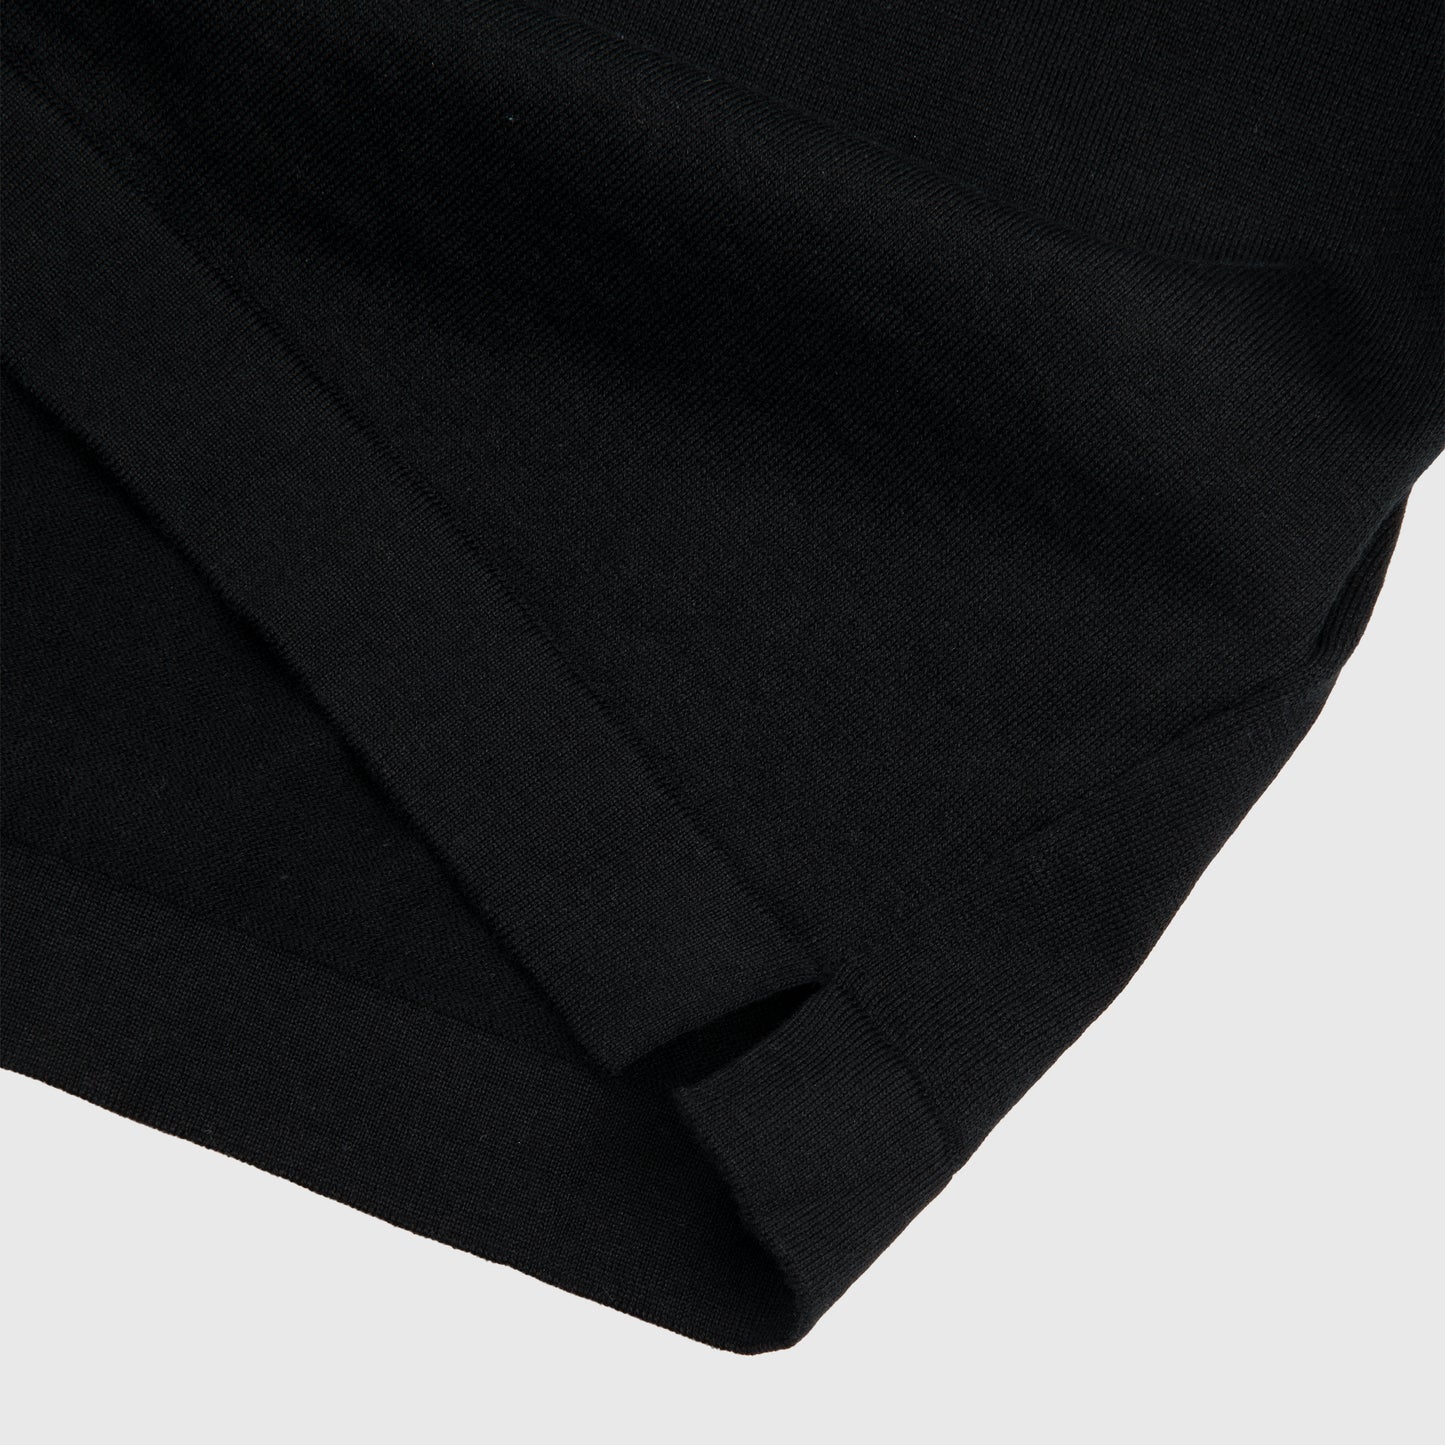 Knit Fine Gauge T-Shirt Black